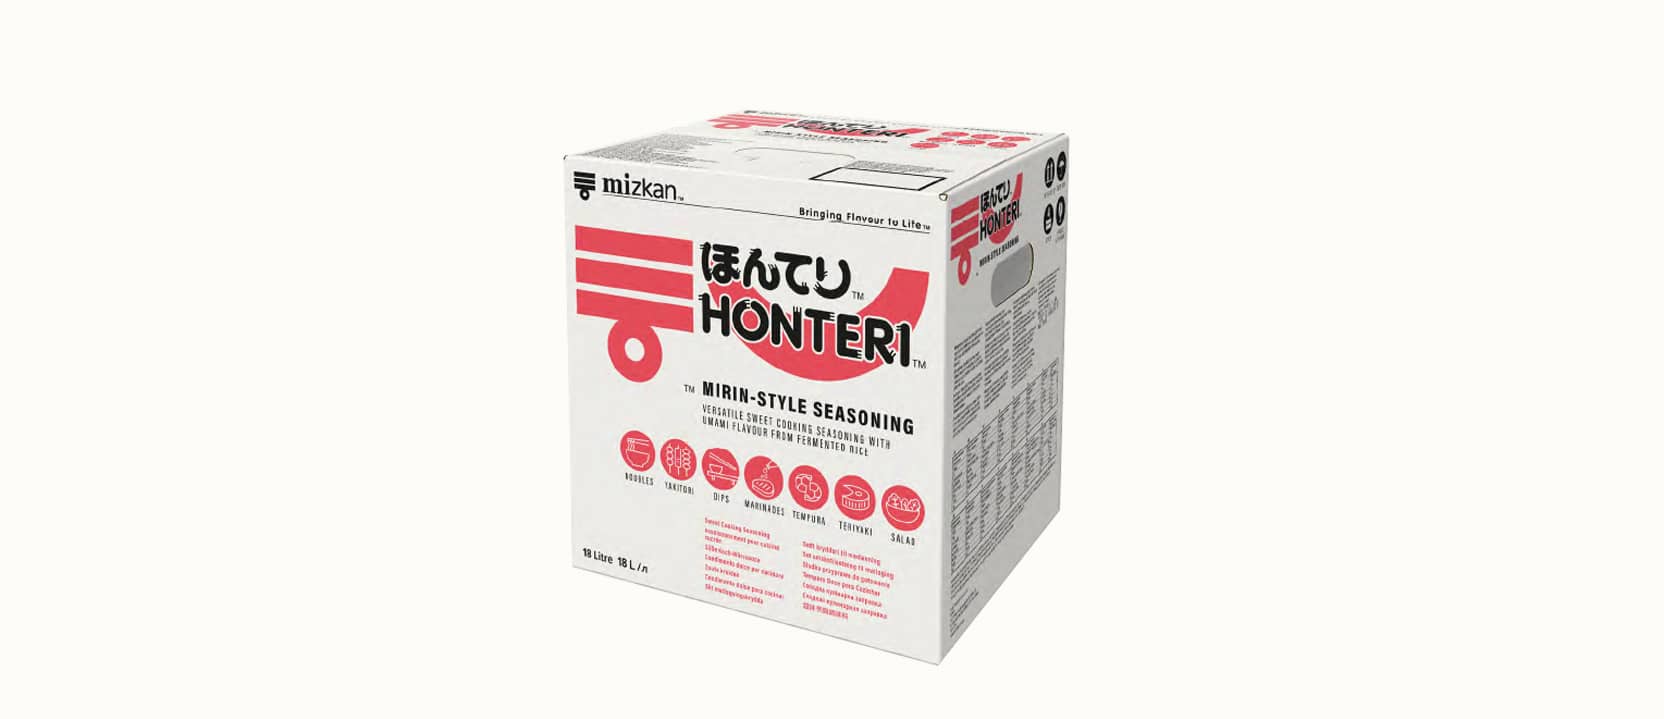 18l wholesale box of Honteri mirin-style seasoning